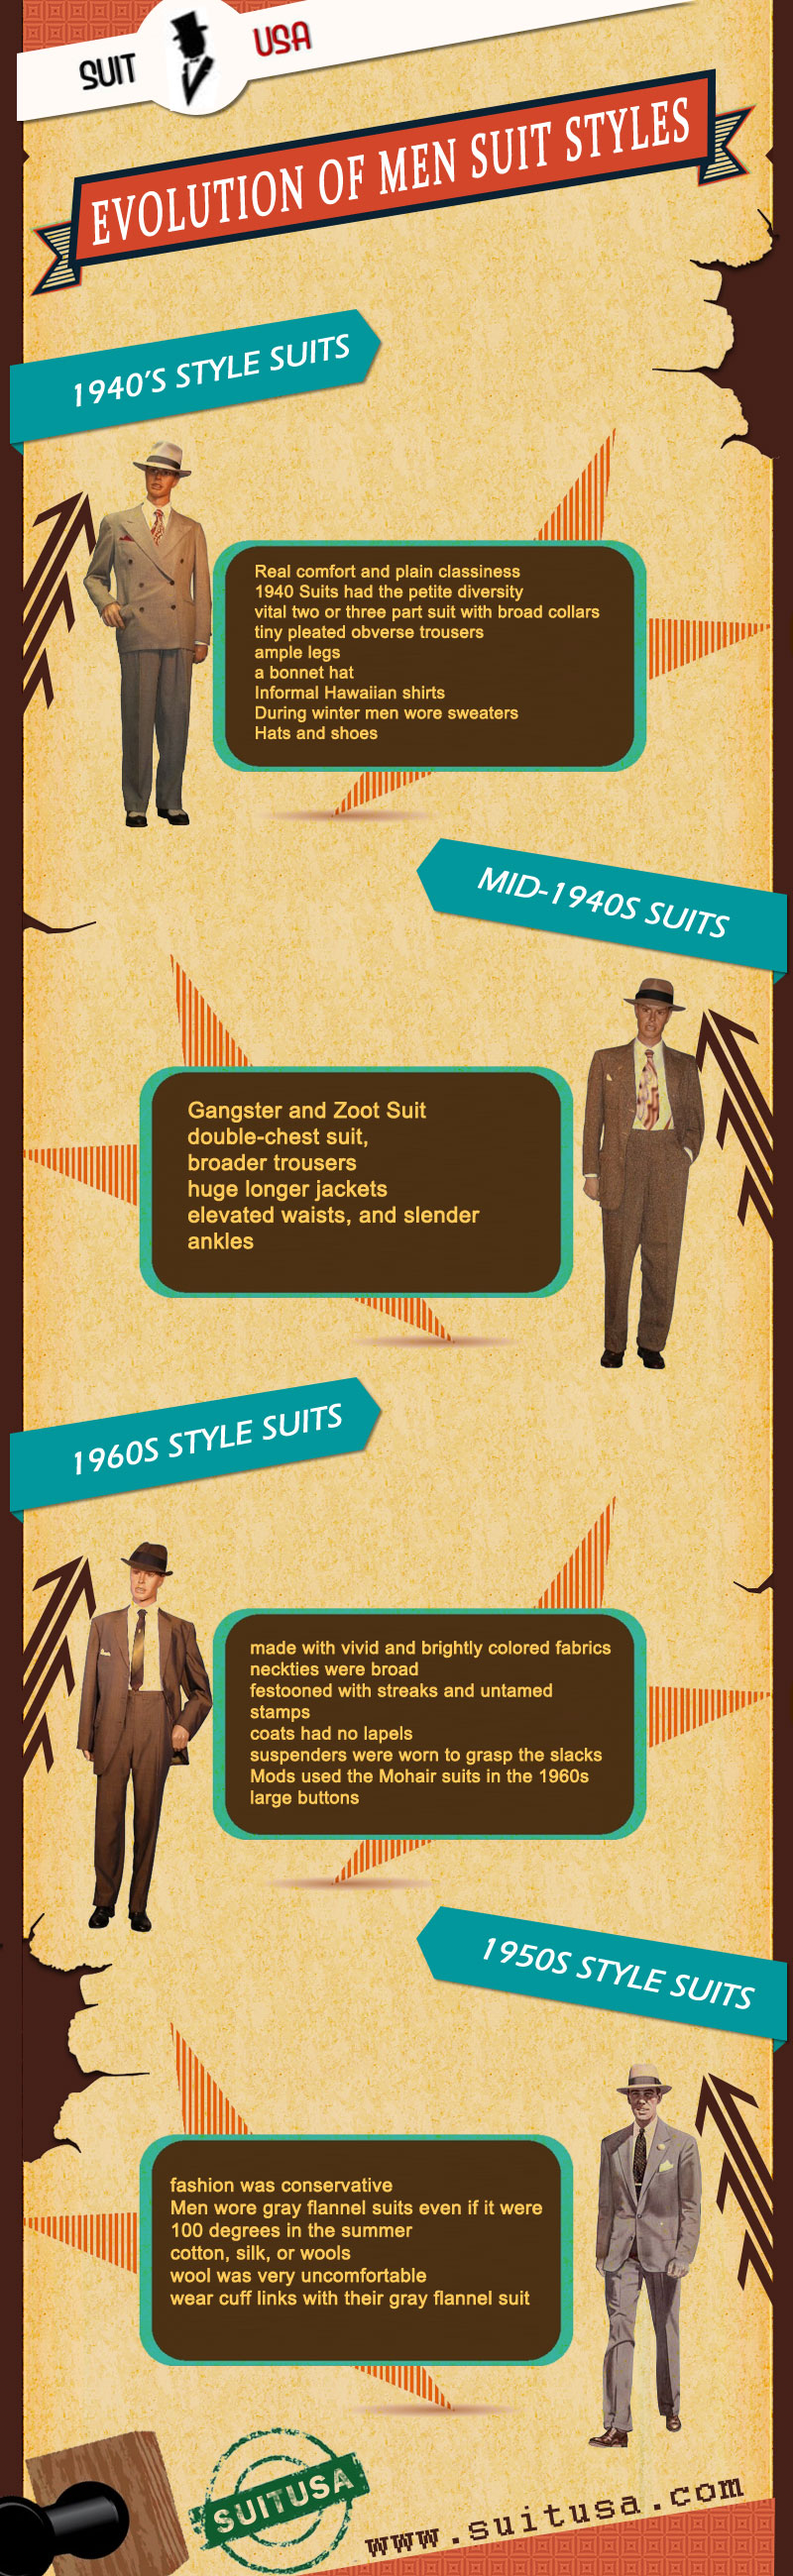 Evolution of Men Suit Styles